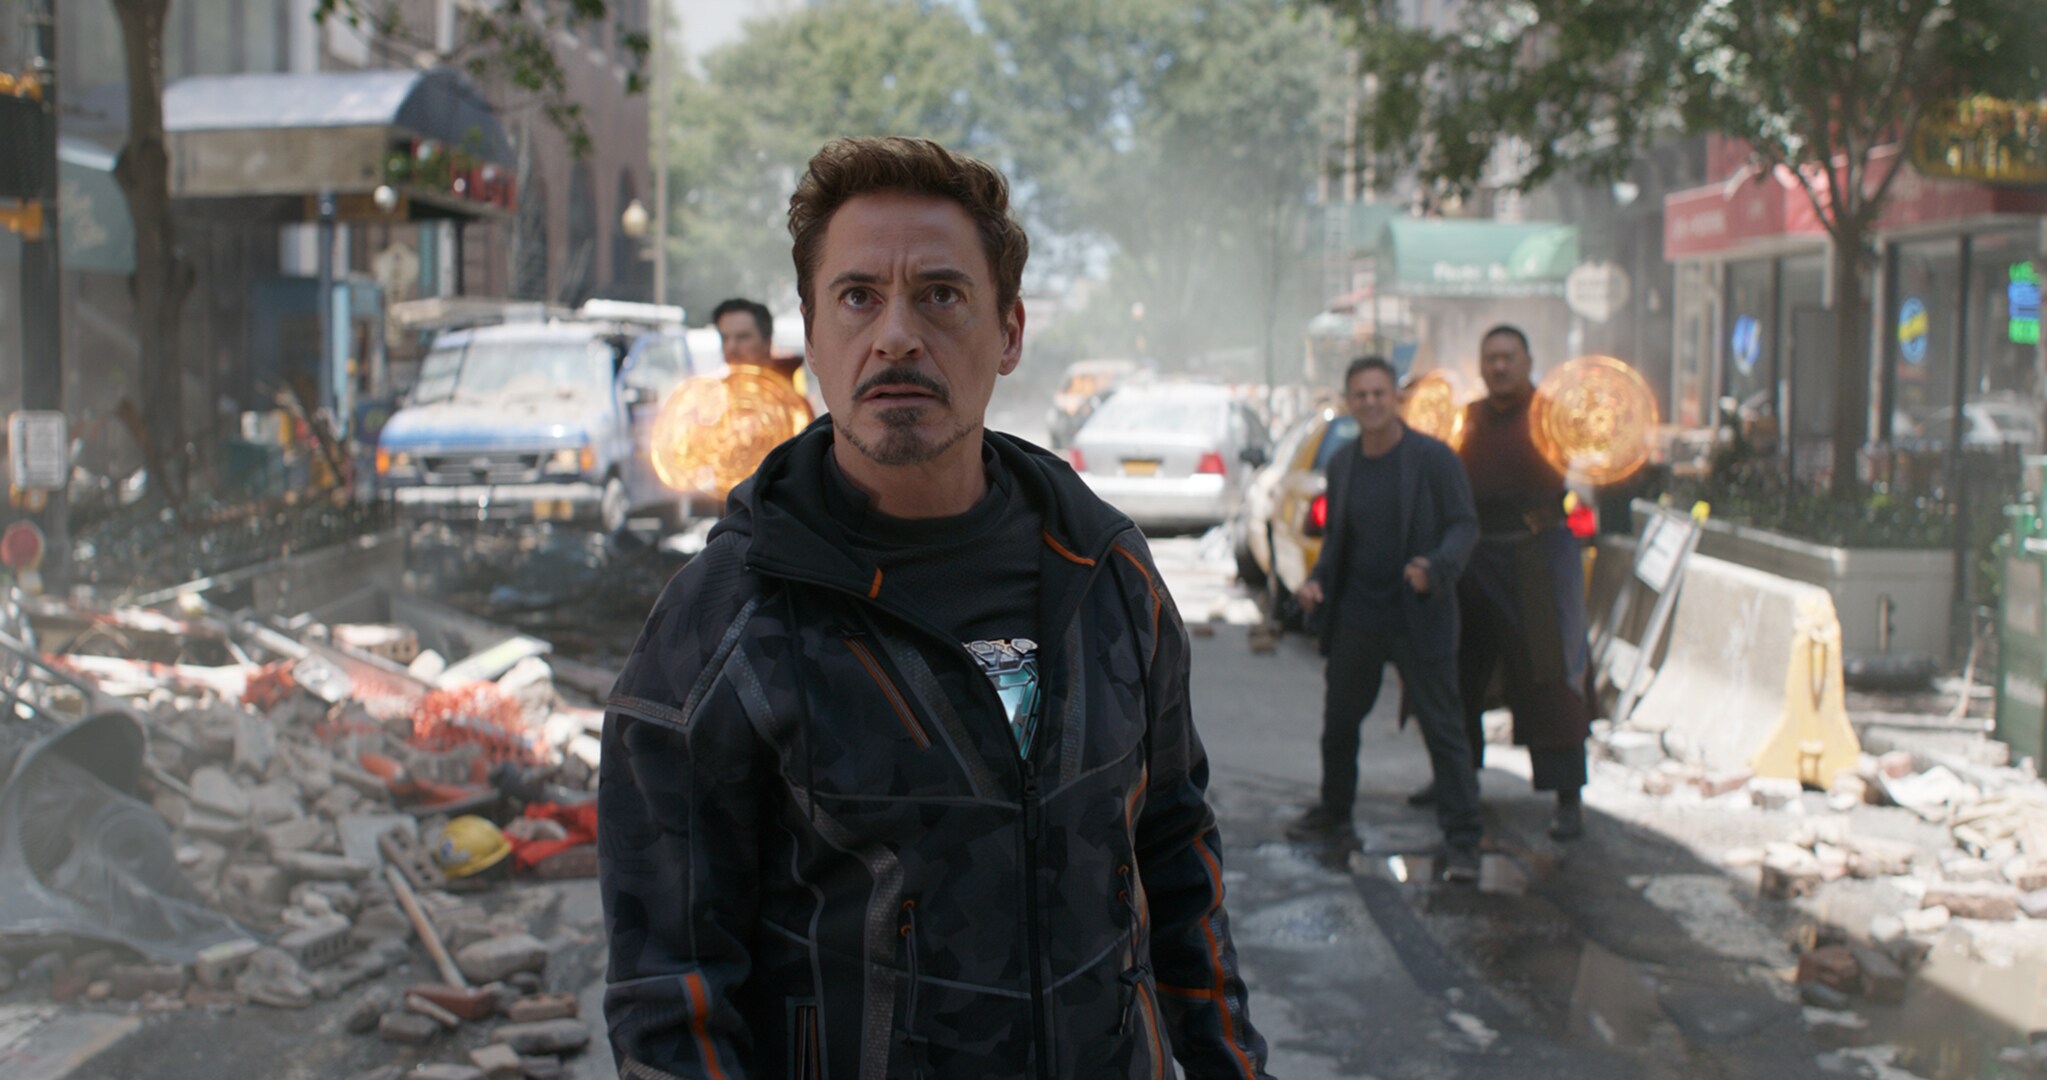 Iron Man Tony Stark